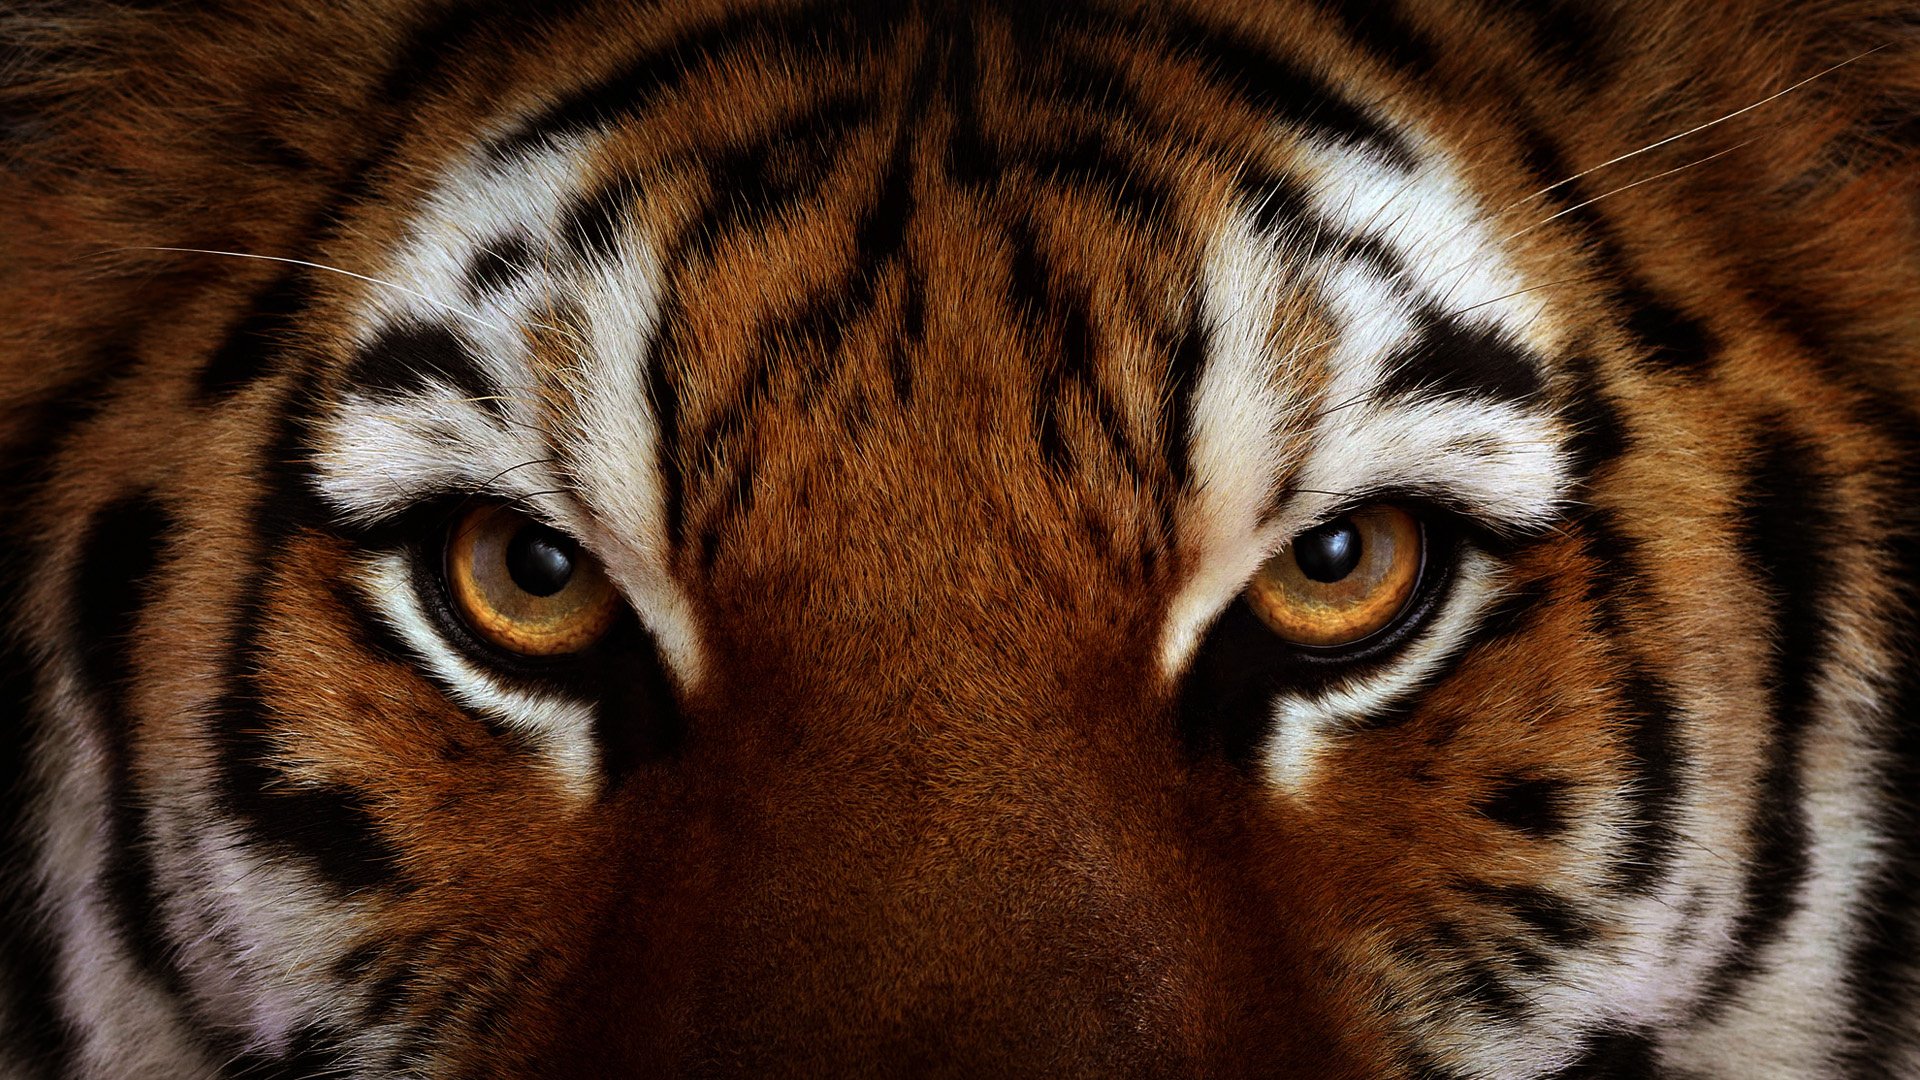 Tiger HD Wallpaper | Background Image | 1920x1080 | ID:378612